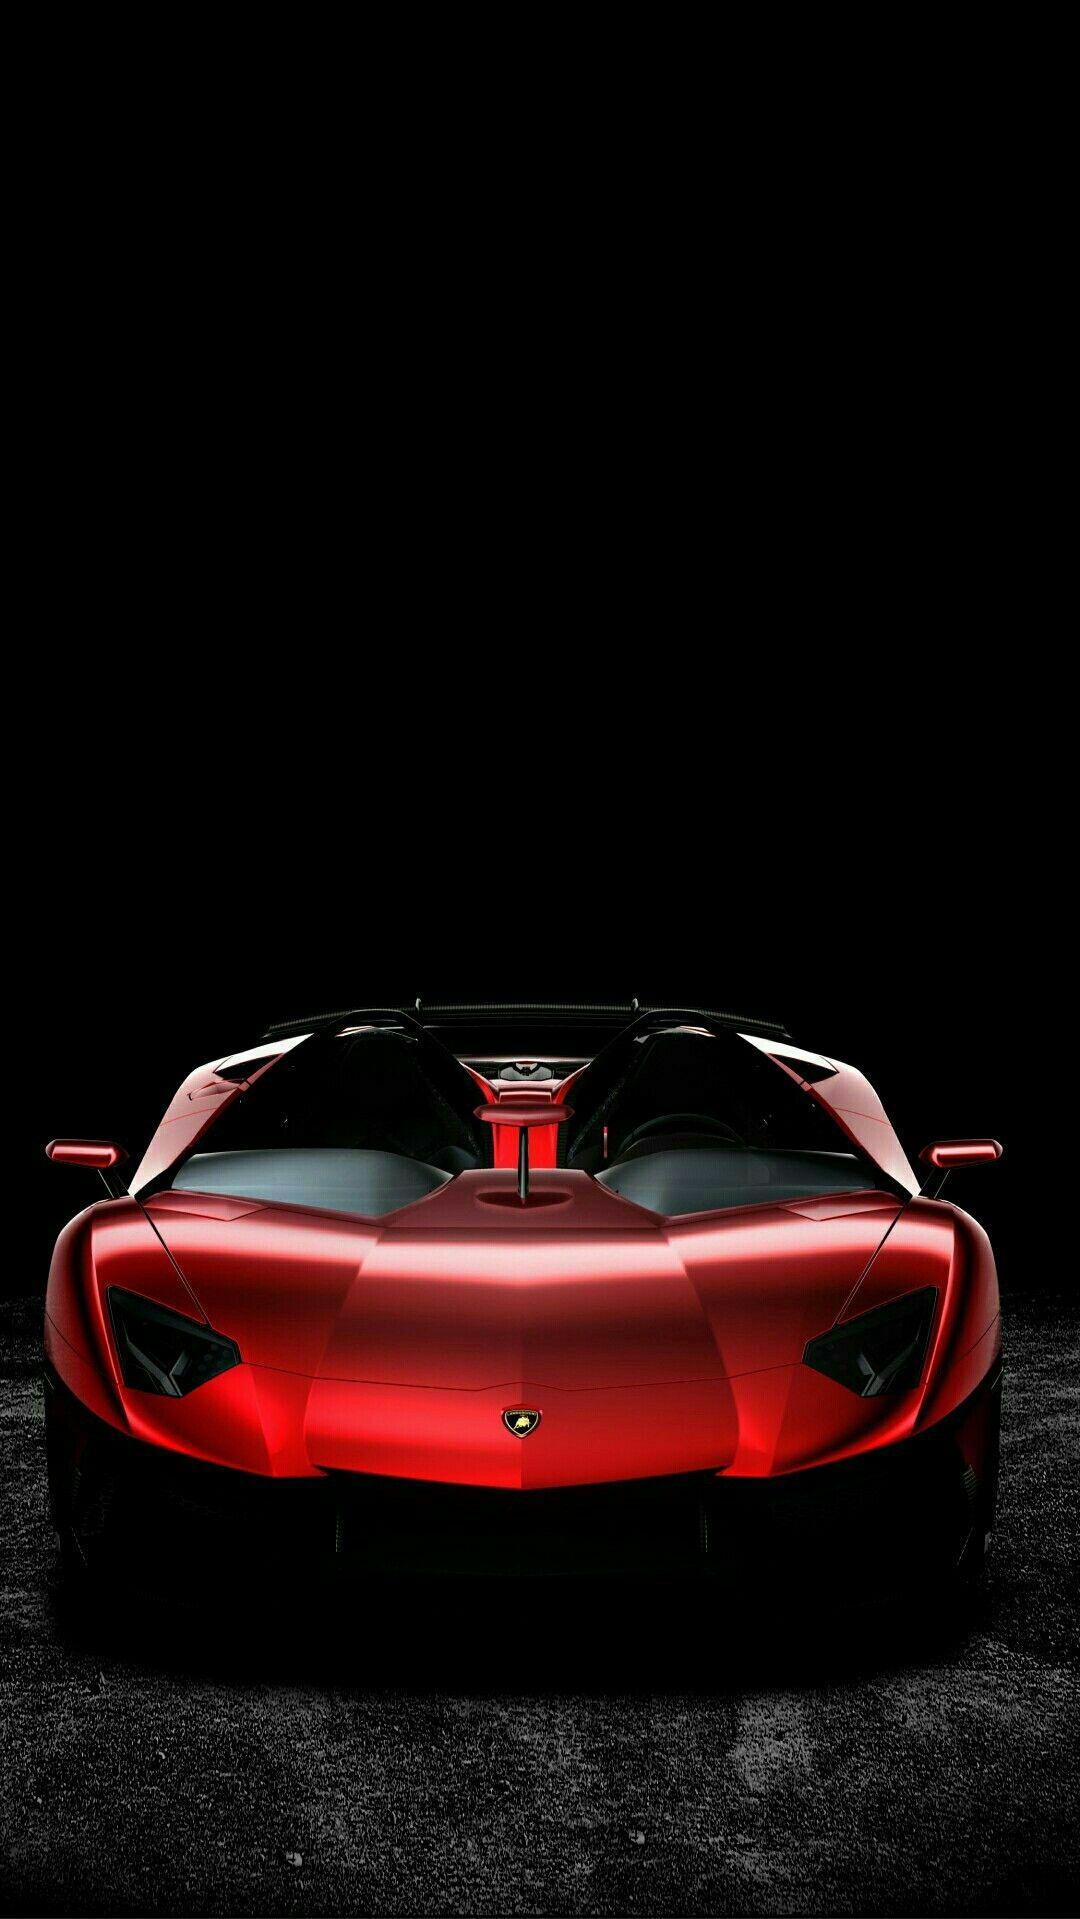 Lamborghini Aventador Black wallpaper iphone Red and black